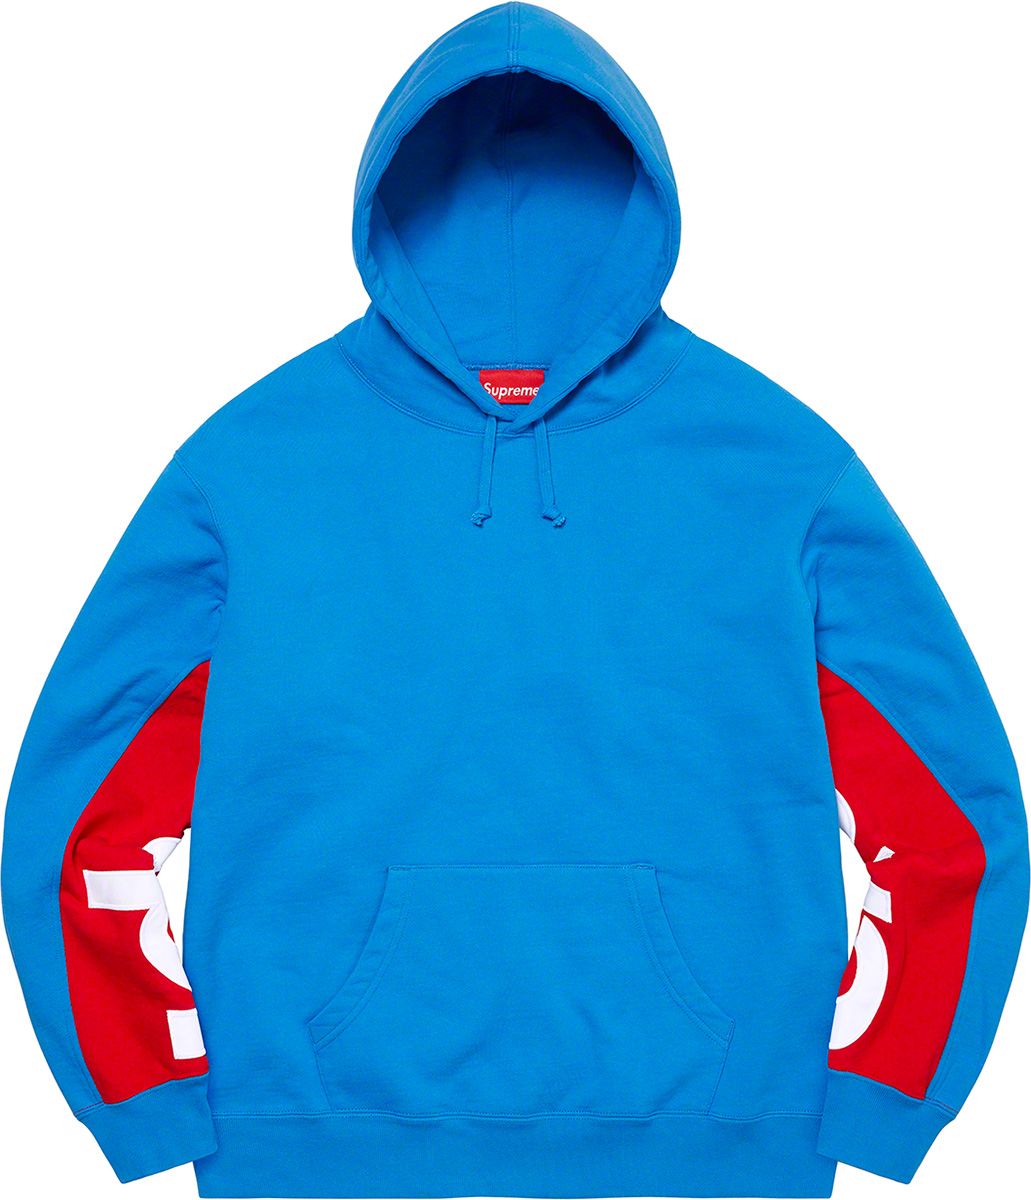 Reverse Patchwork Zip Up Hooded Sweatshirt - Spring/Summer 2022 ...